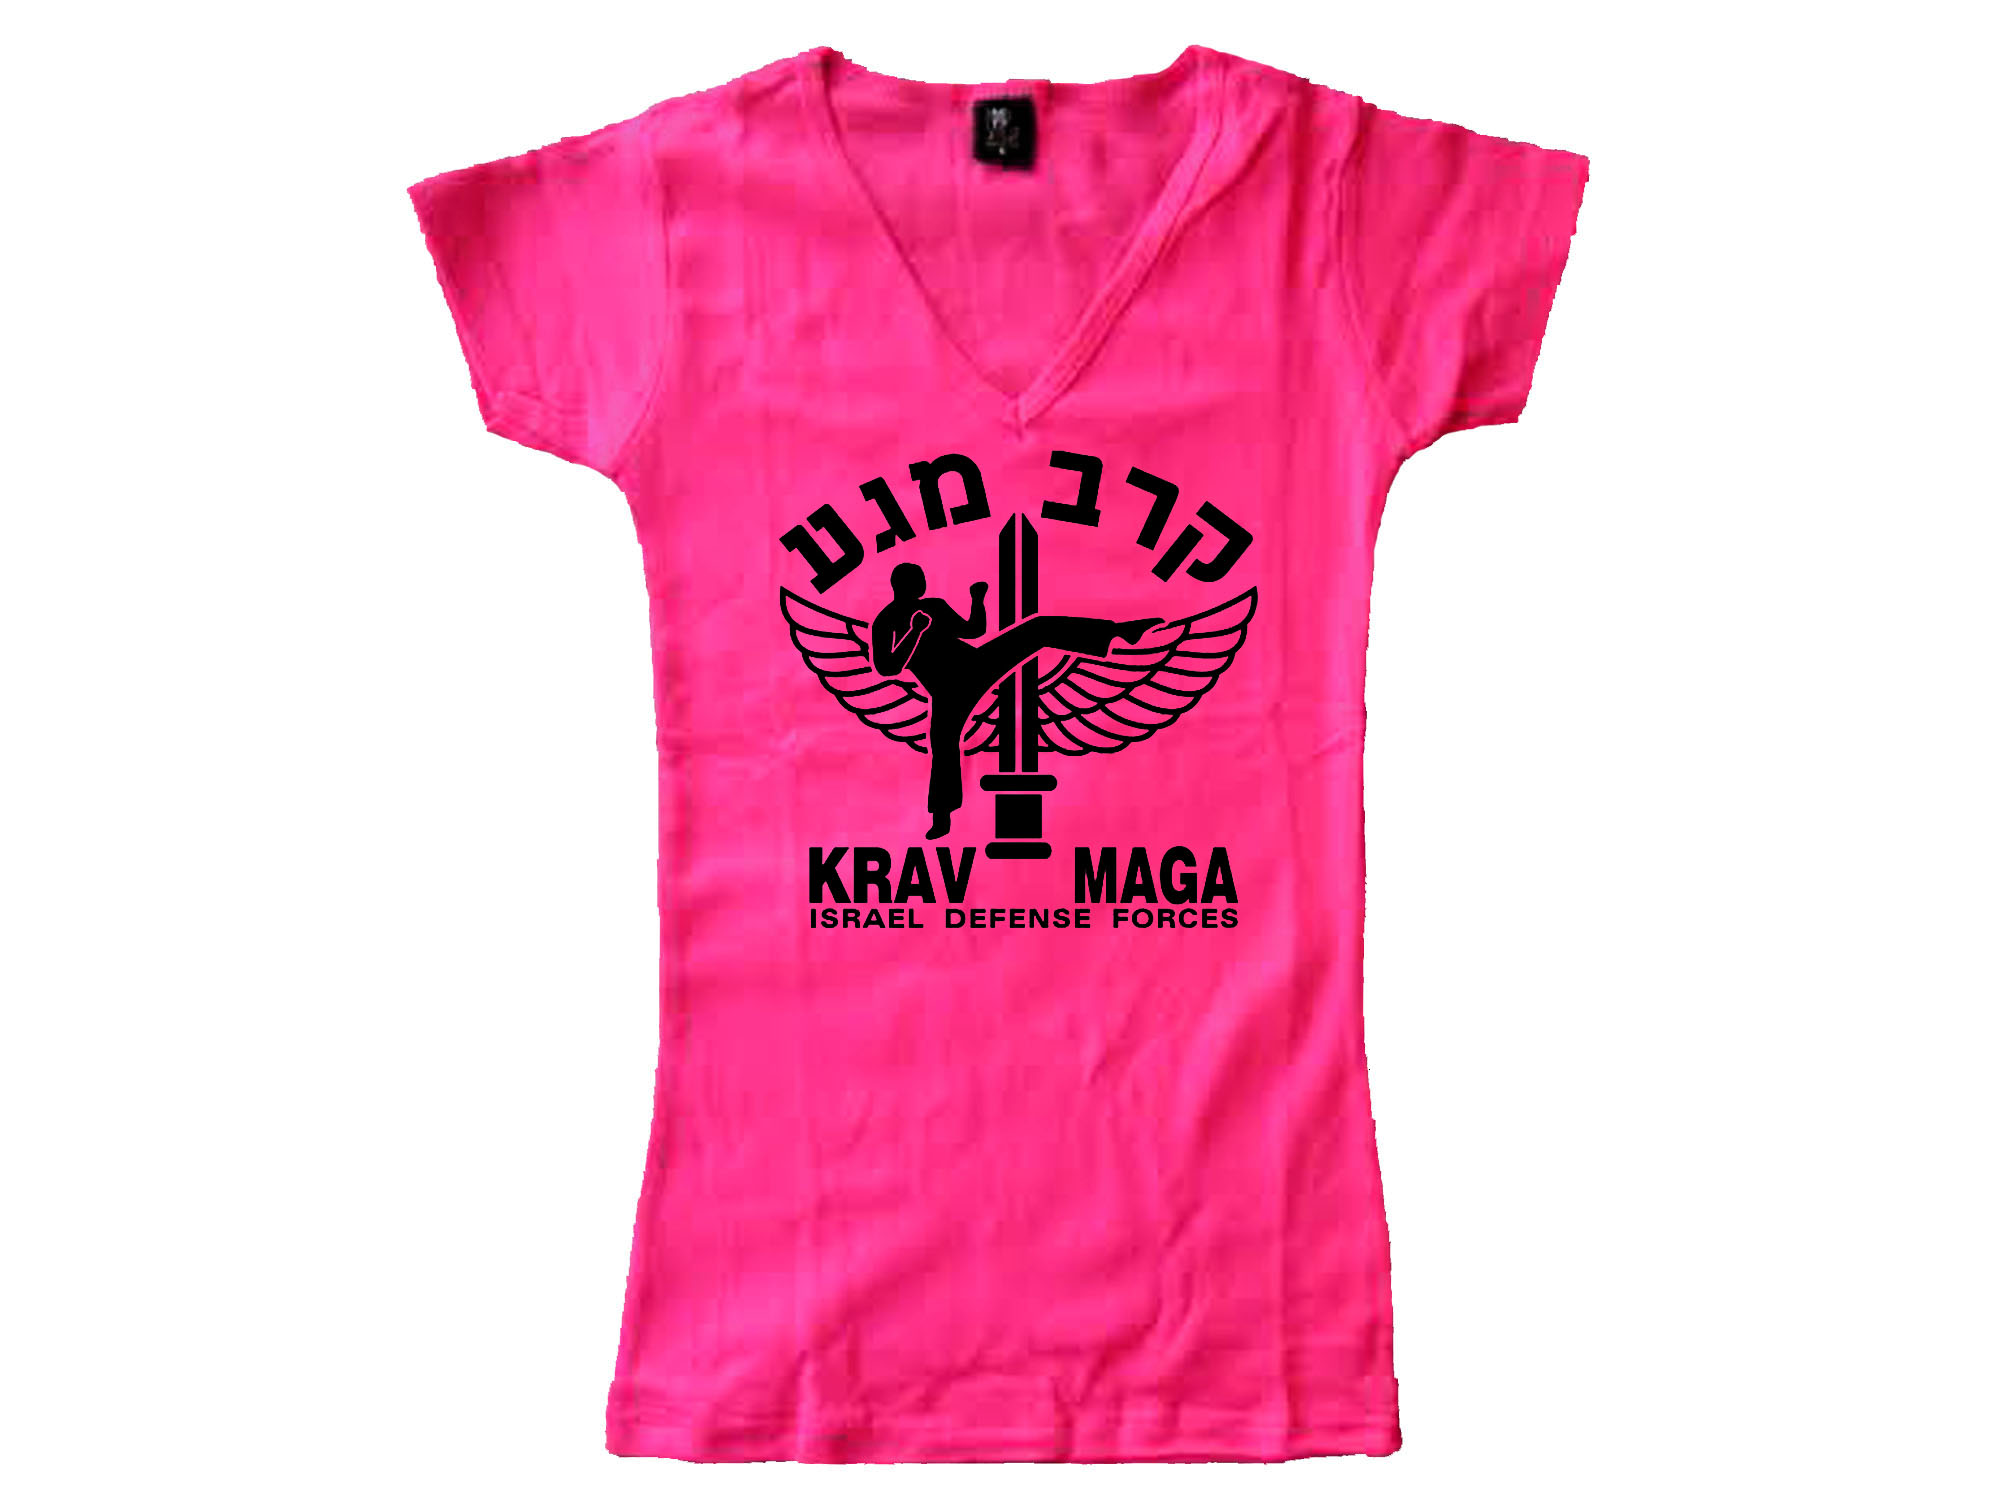 Krav Maga emblem V Neck pink t-shirt